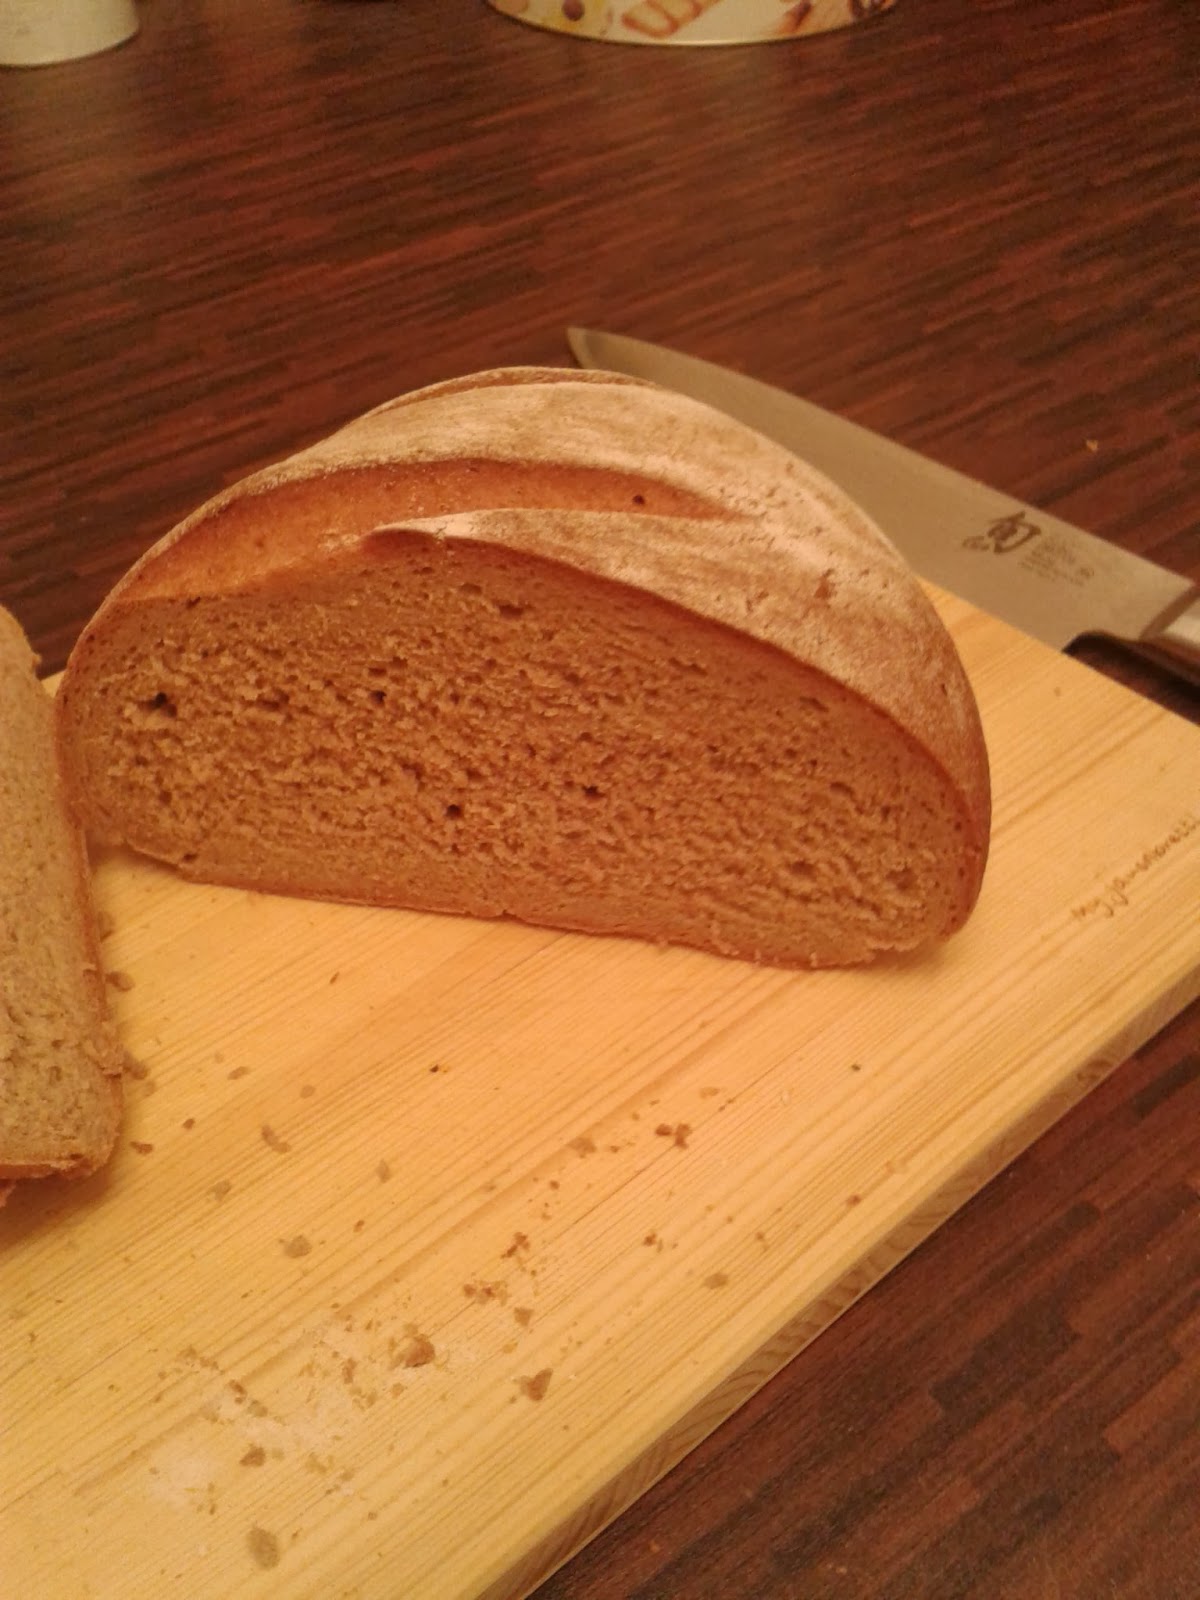 selbstgemacht: Erstes selbstgemachtes Brot